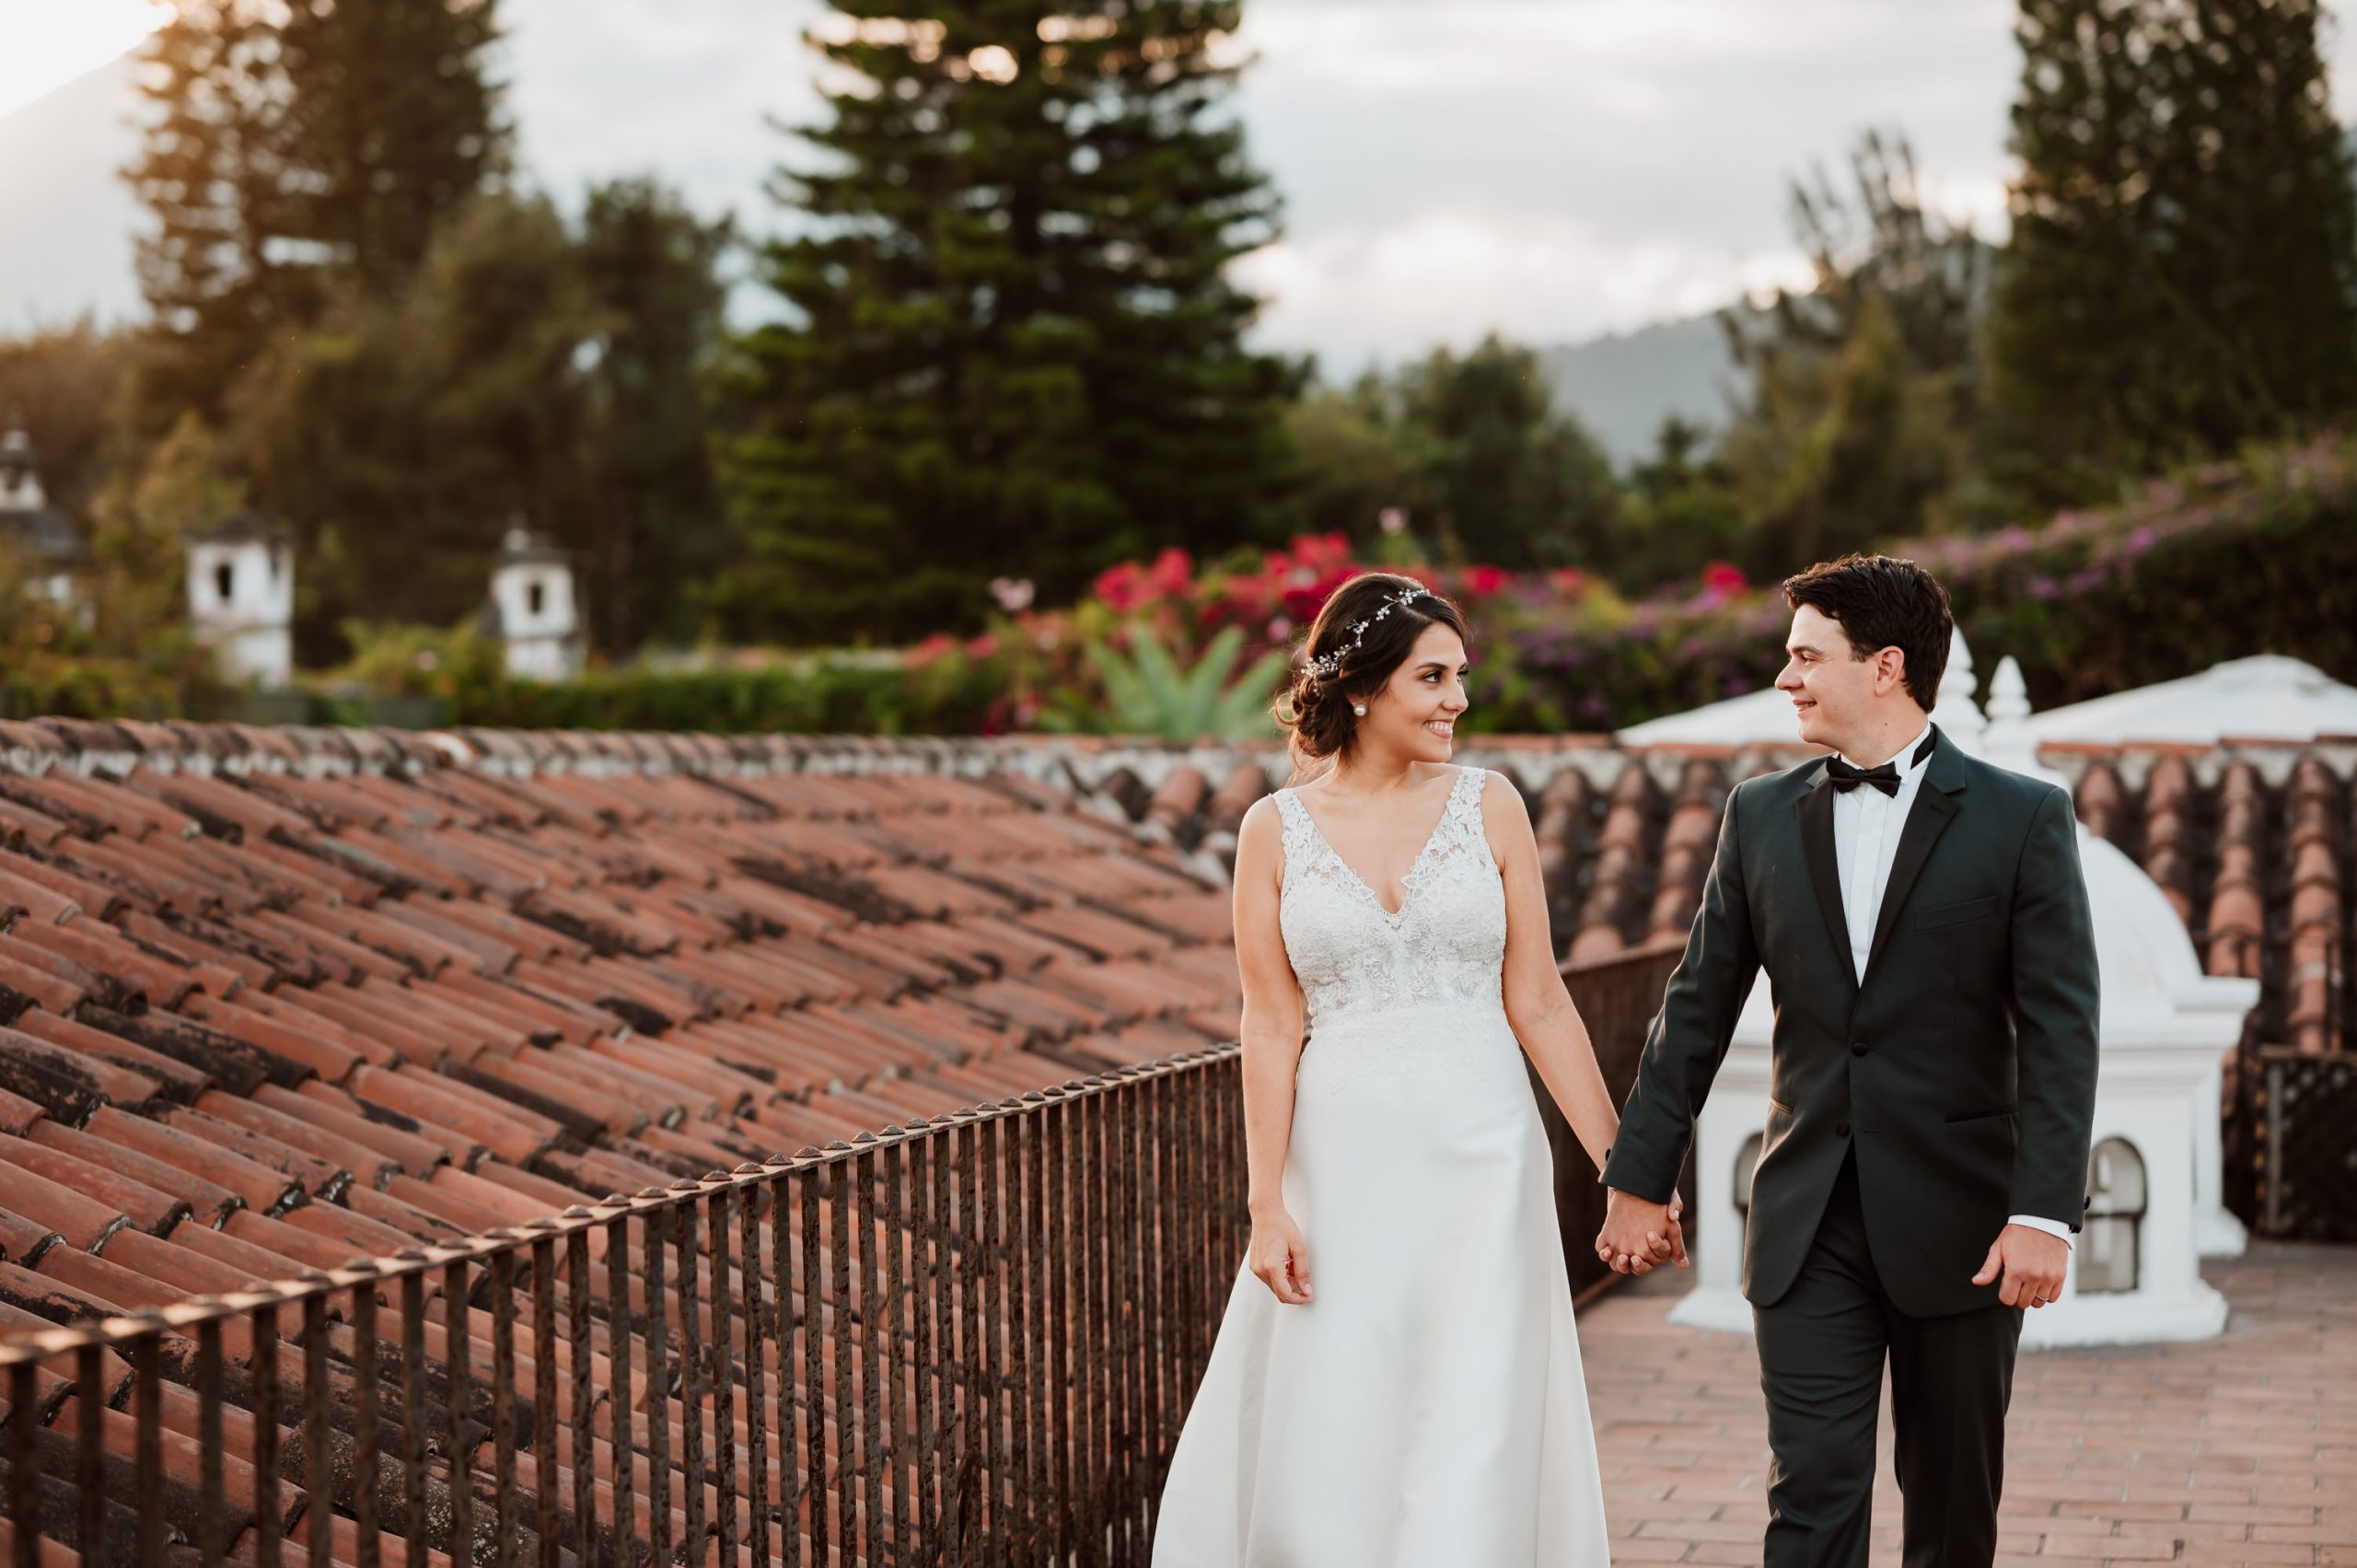 Cuánto se gasta en una boda en Guatemala? - Wedding photographer Guatemala  | Fotógrafo Antigua Guatemala